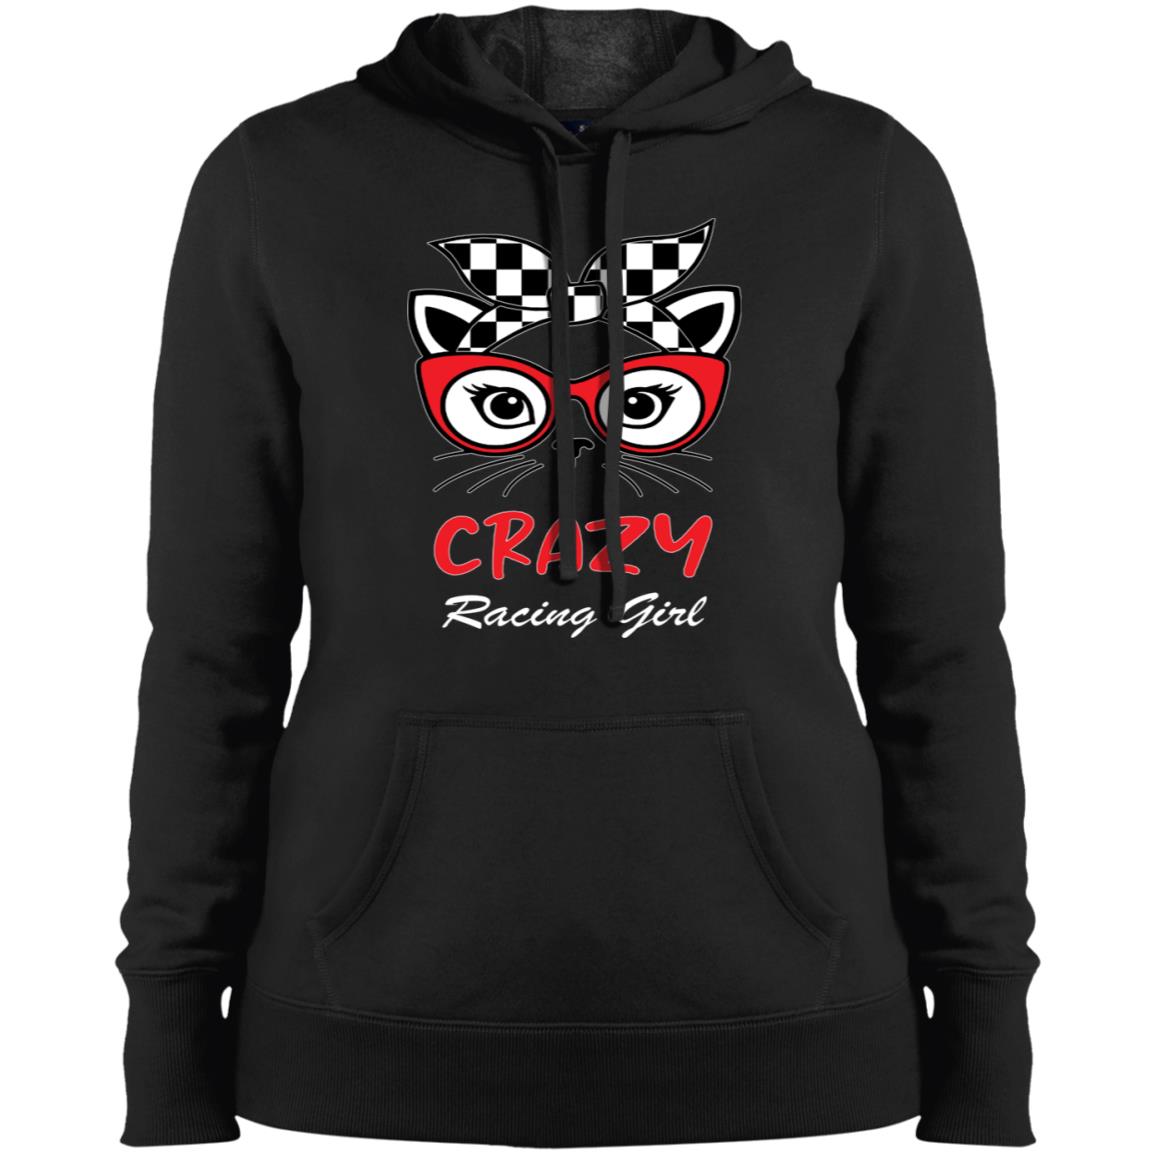 Crazy Racing Girl Ladies' Pullover Hooded Sweatshirt